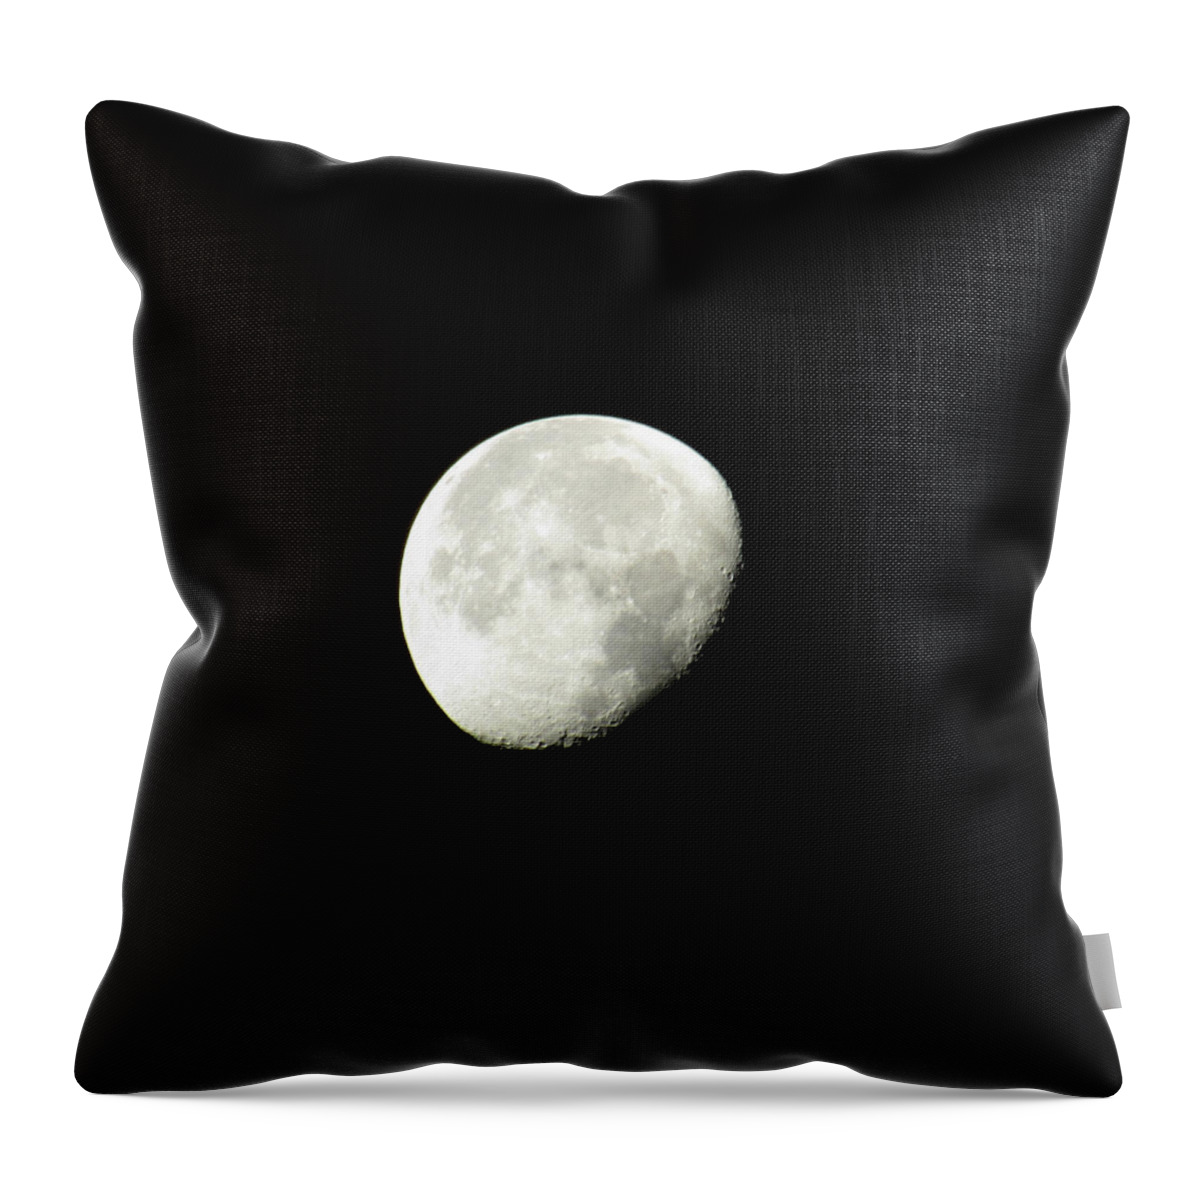 Moon Throw Pillow featuring the photograph Moon Light by Robert Knight